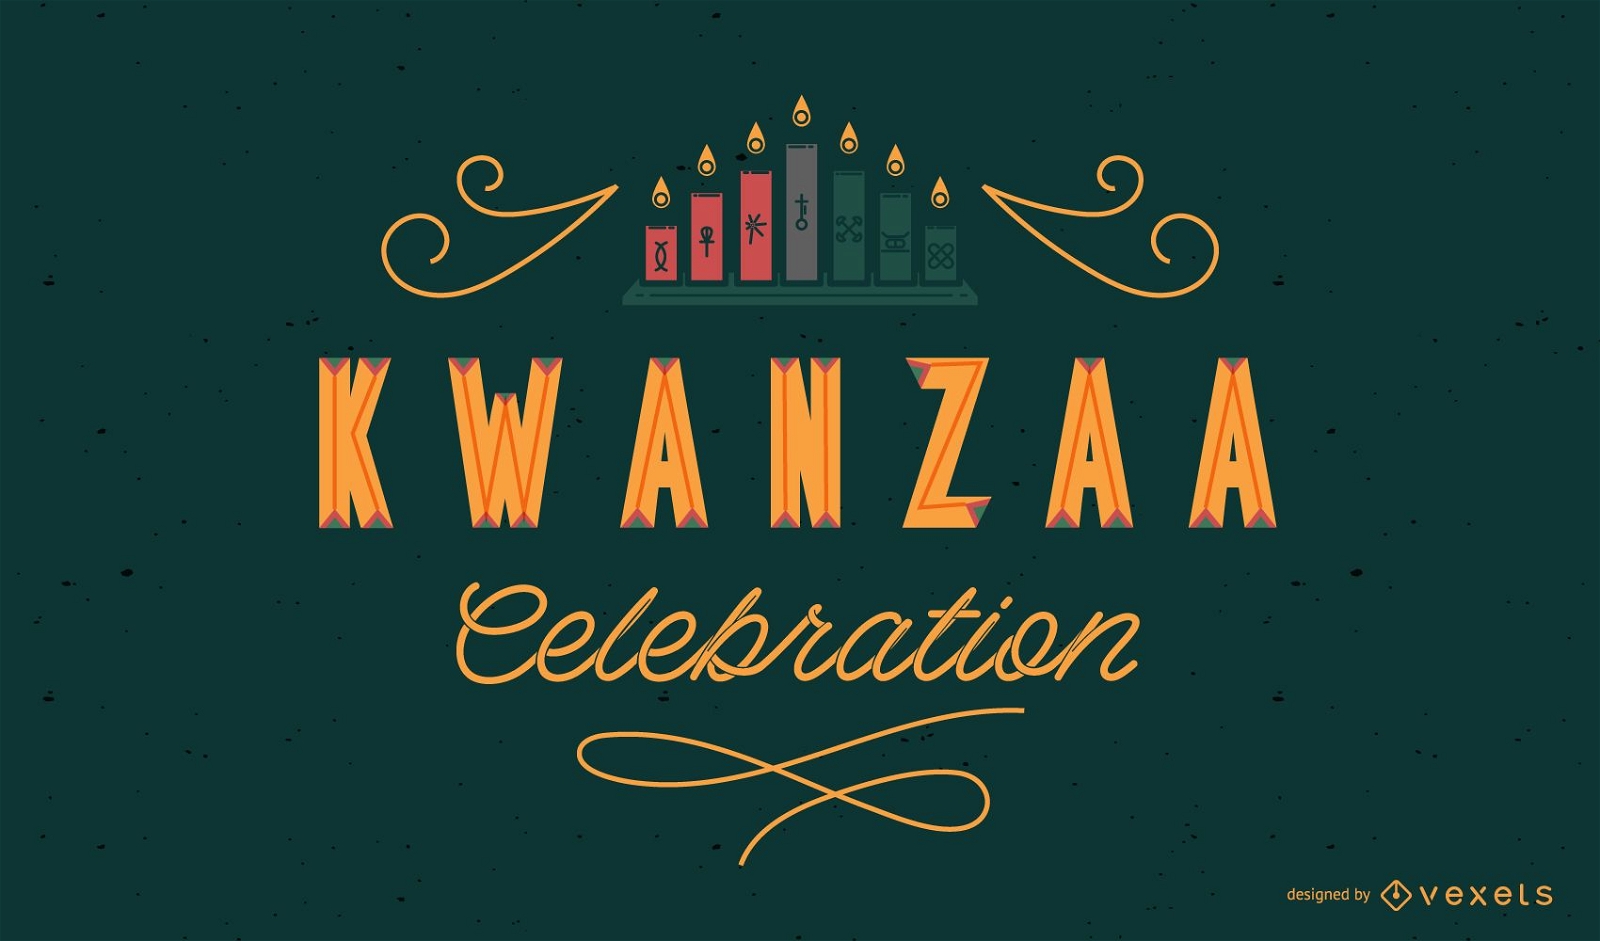 Kwanzaa celebration lettering design